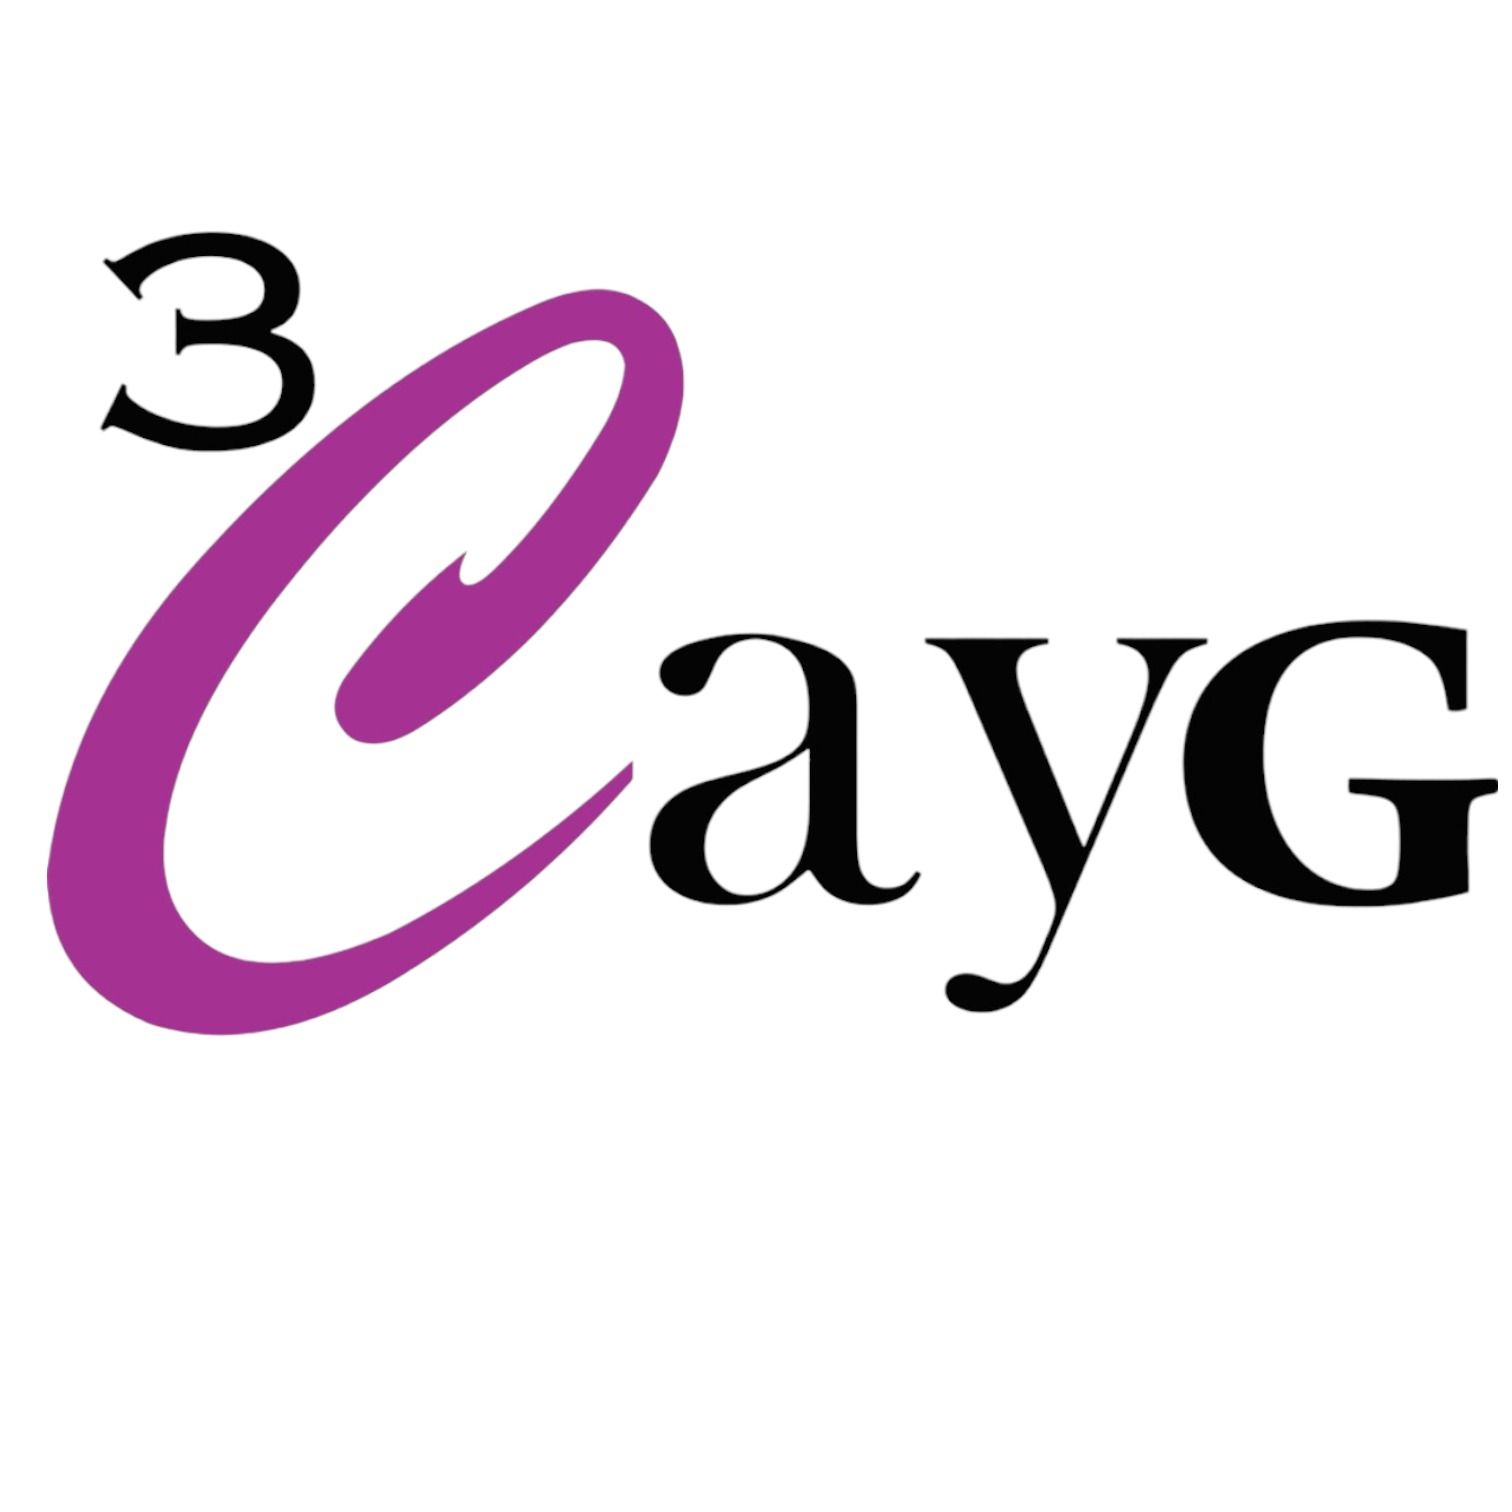 3CayG Refined vs Unrefined Sampler